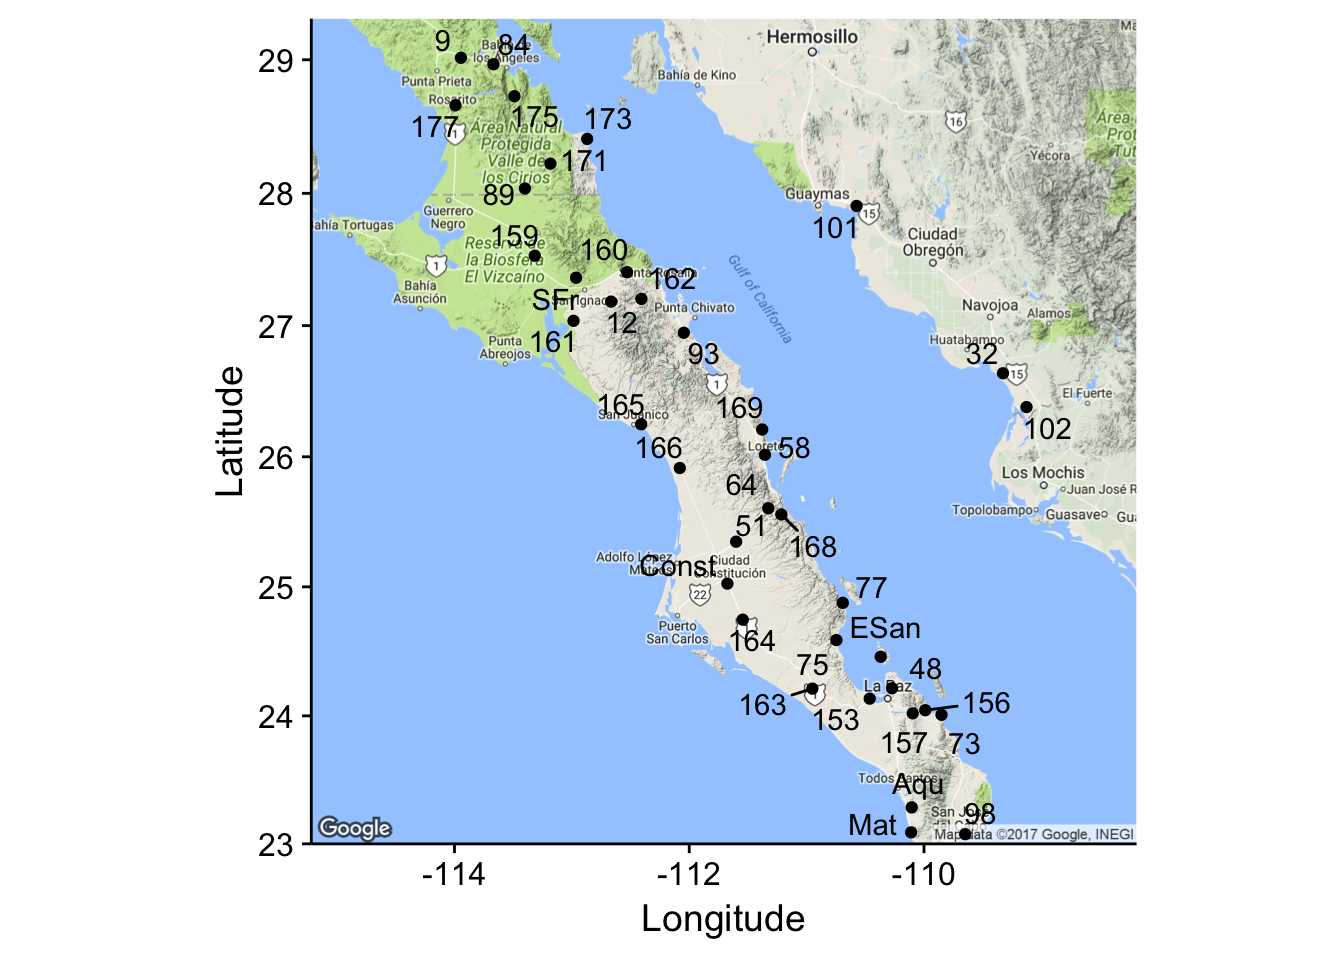 Sampling locales for the `arapat` data set.